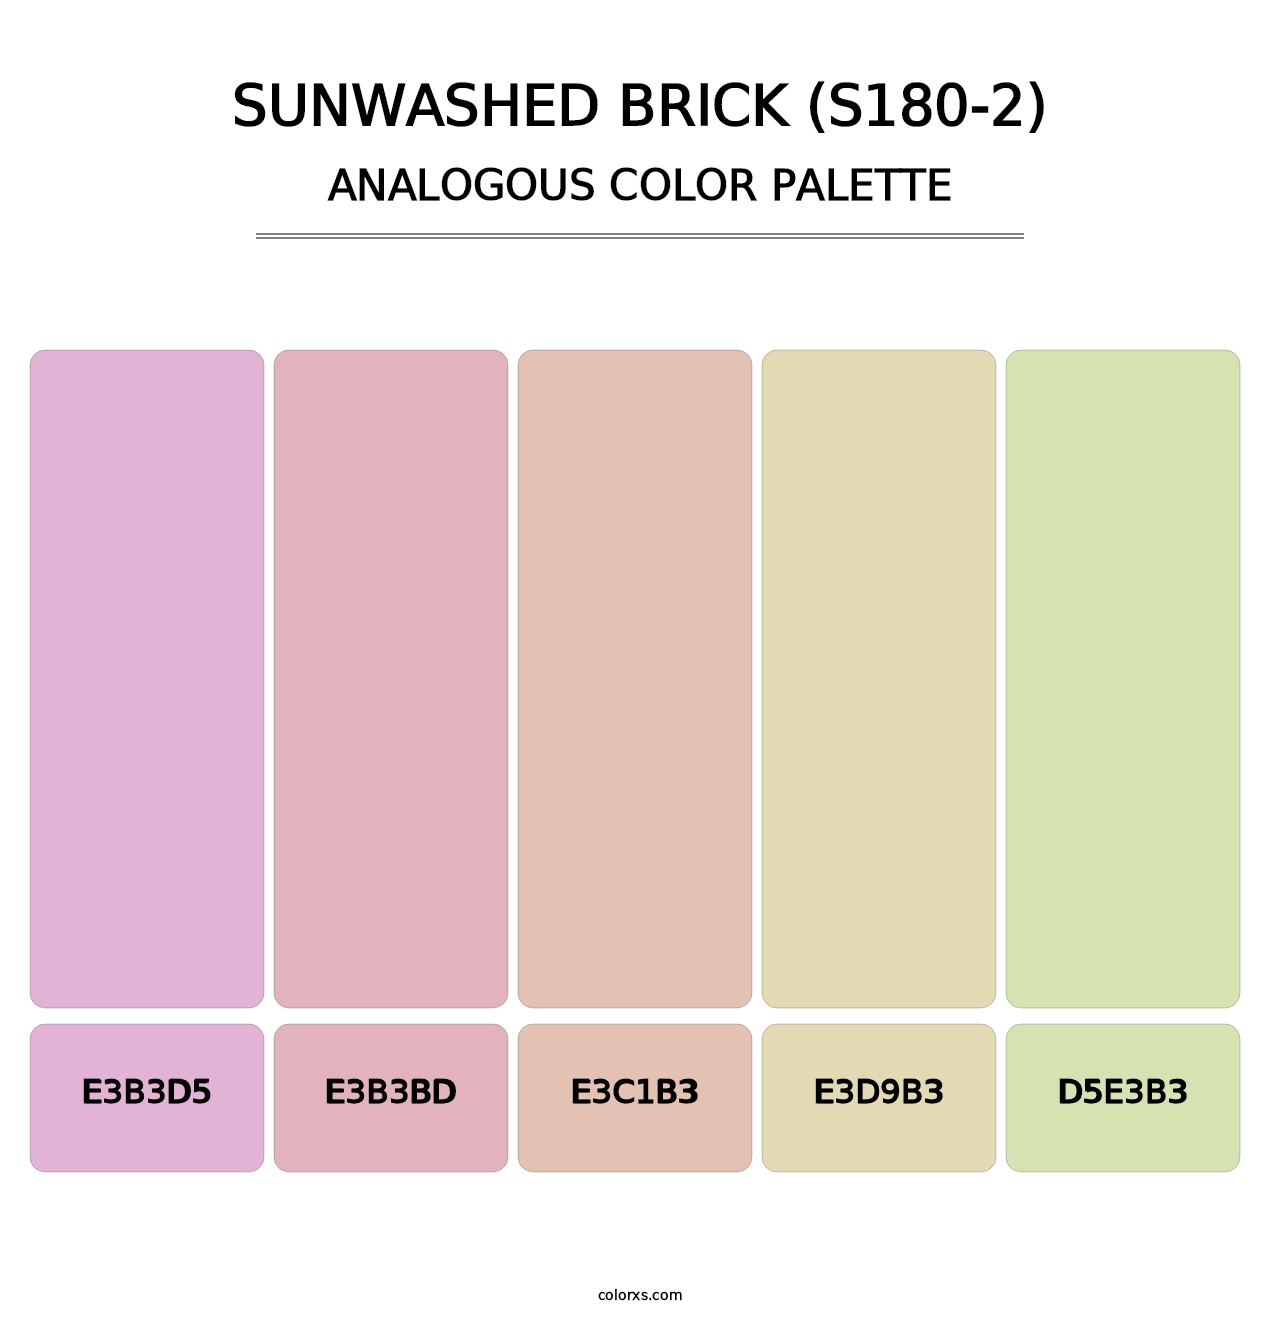 Sunwashed Brick (S180-2) - Analogous Color Palette